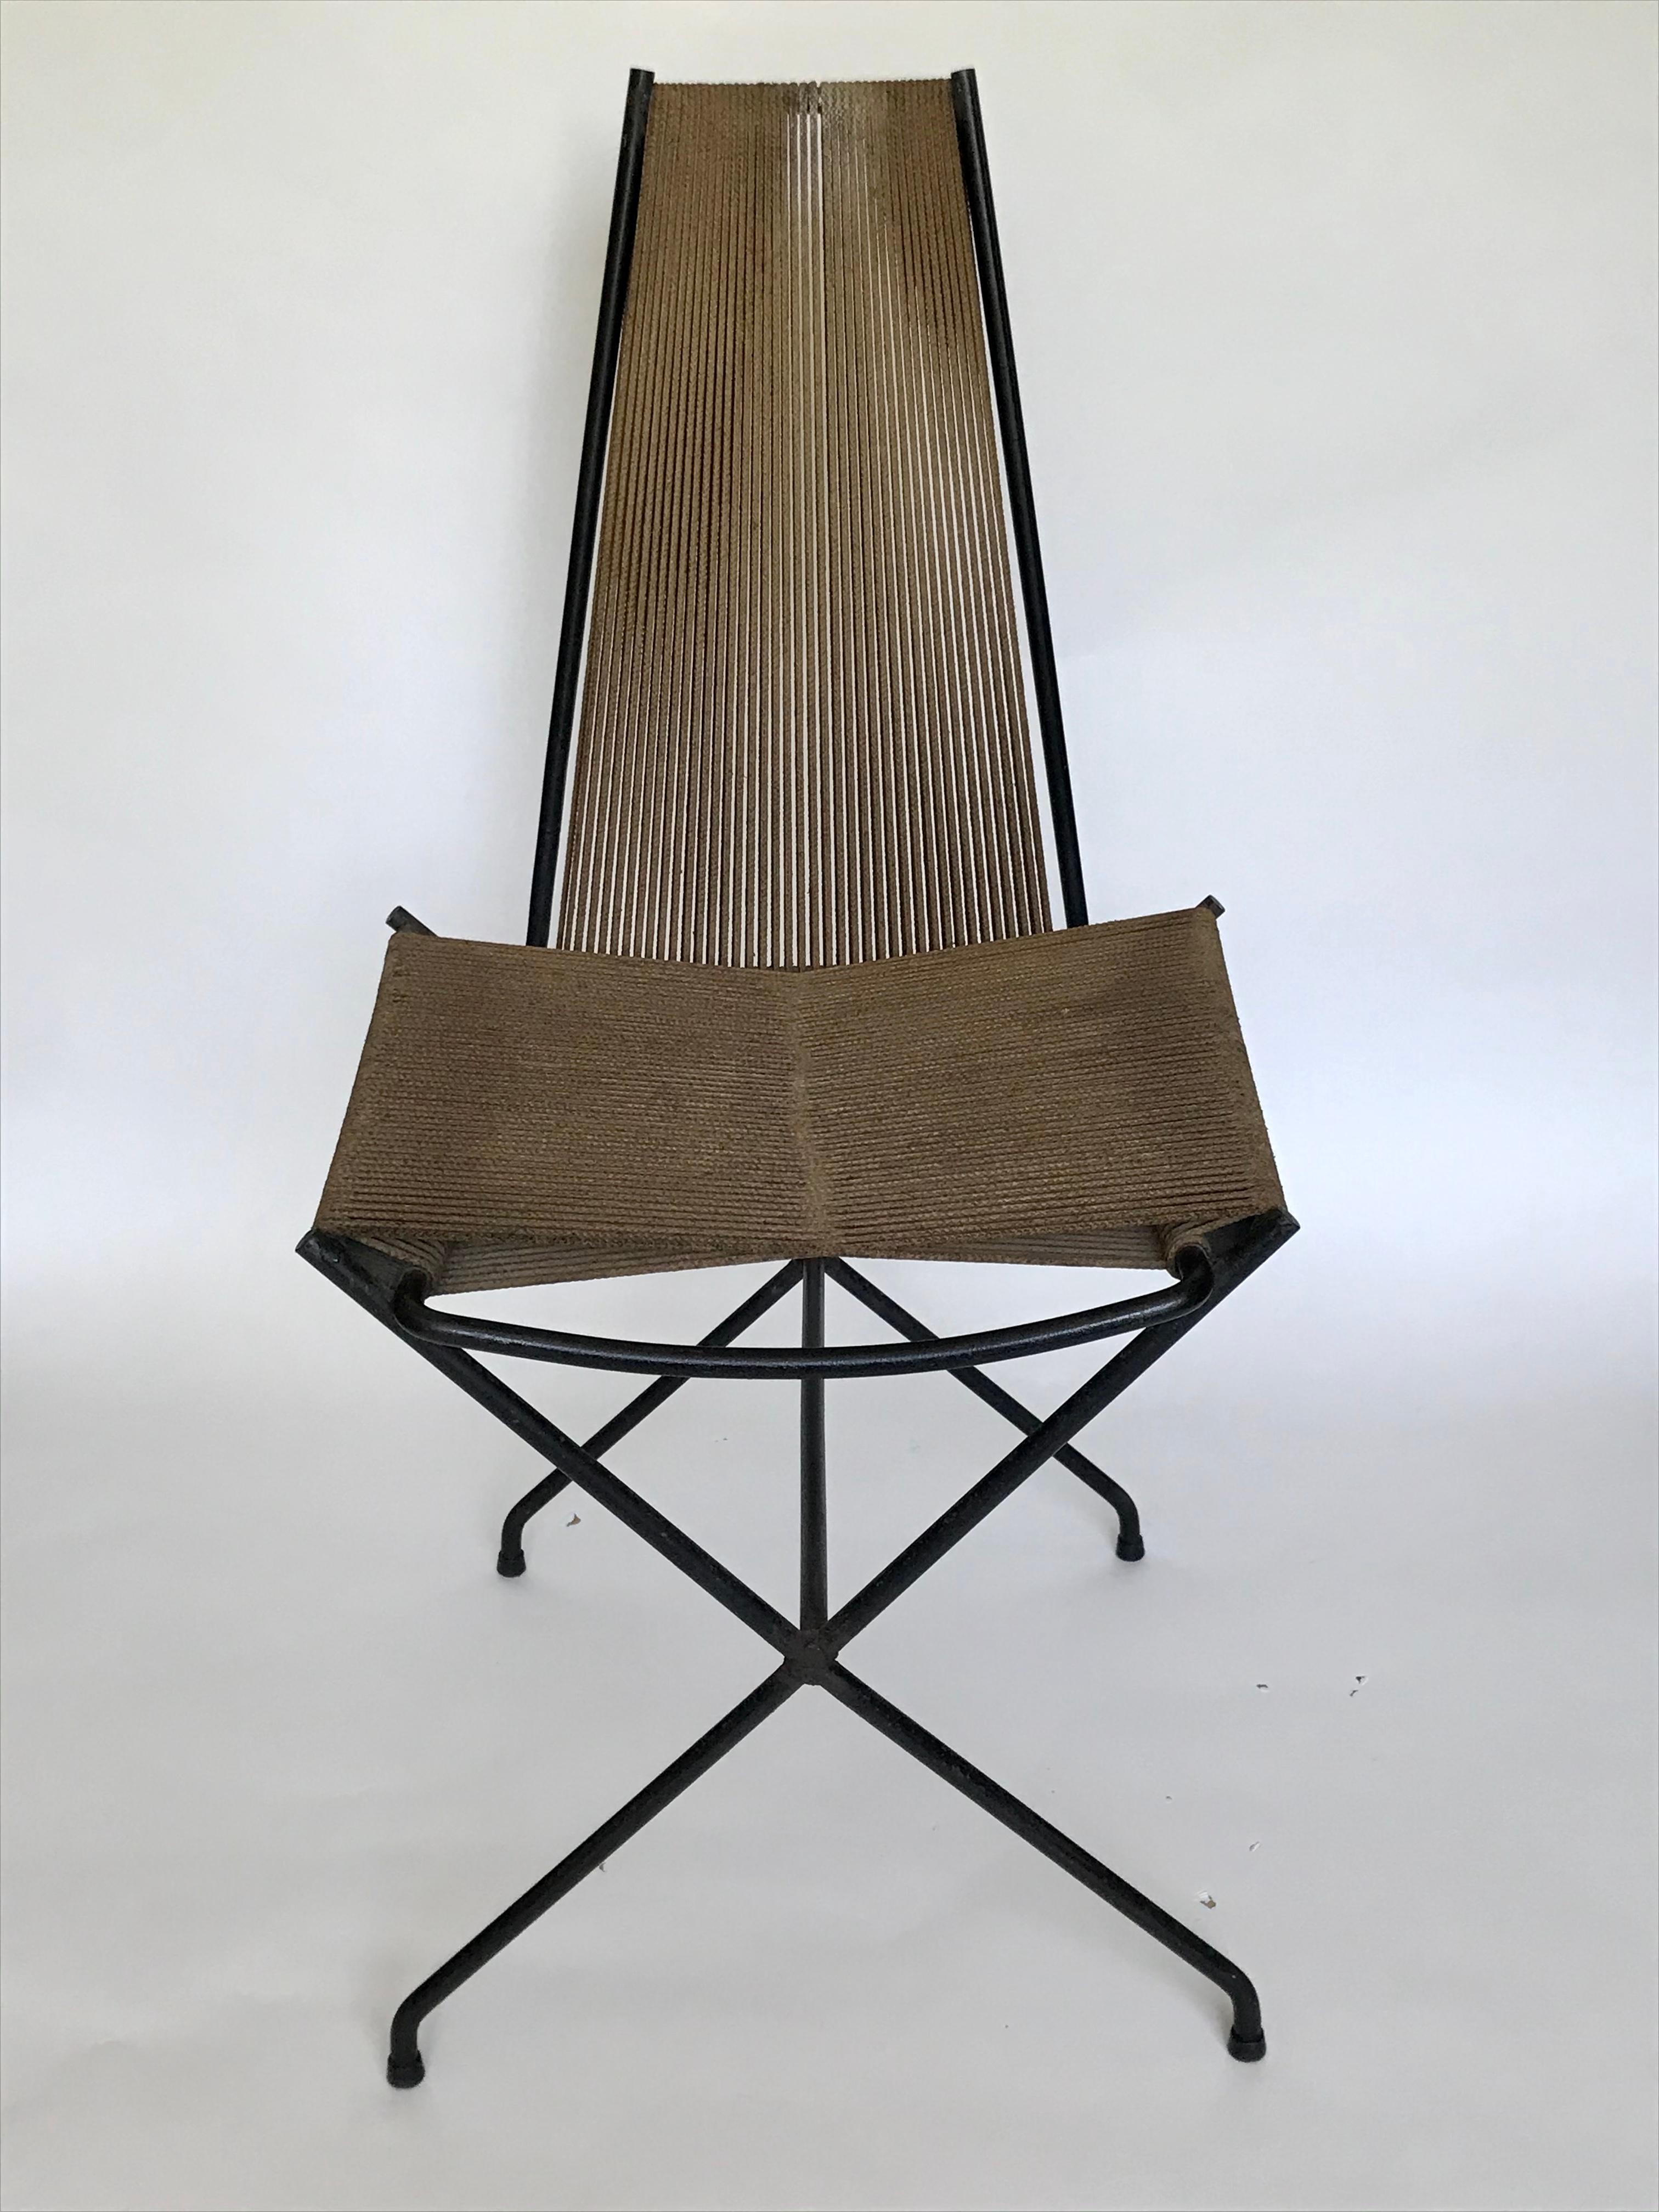 Cord Gunnar Birkerts Architectural Iron + String Chair, 20th Century